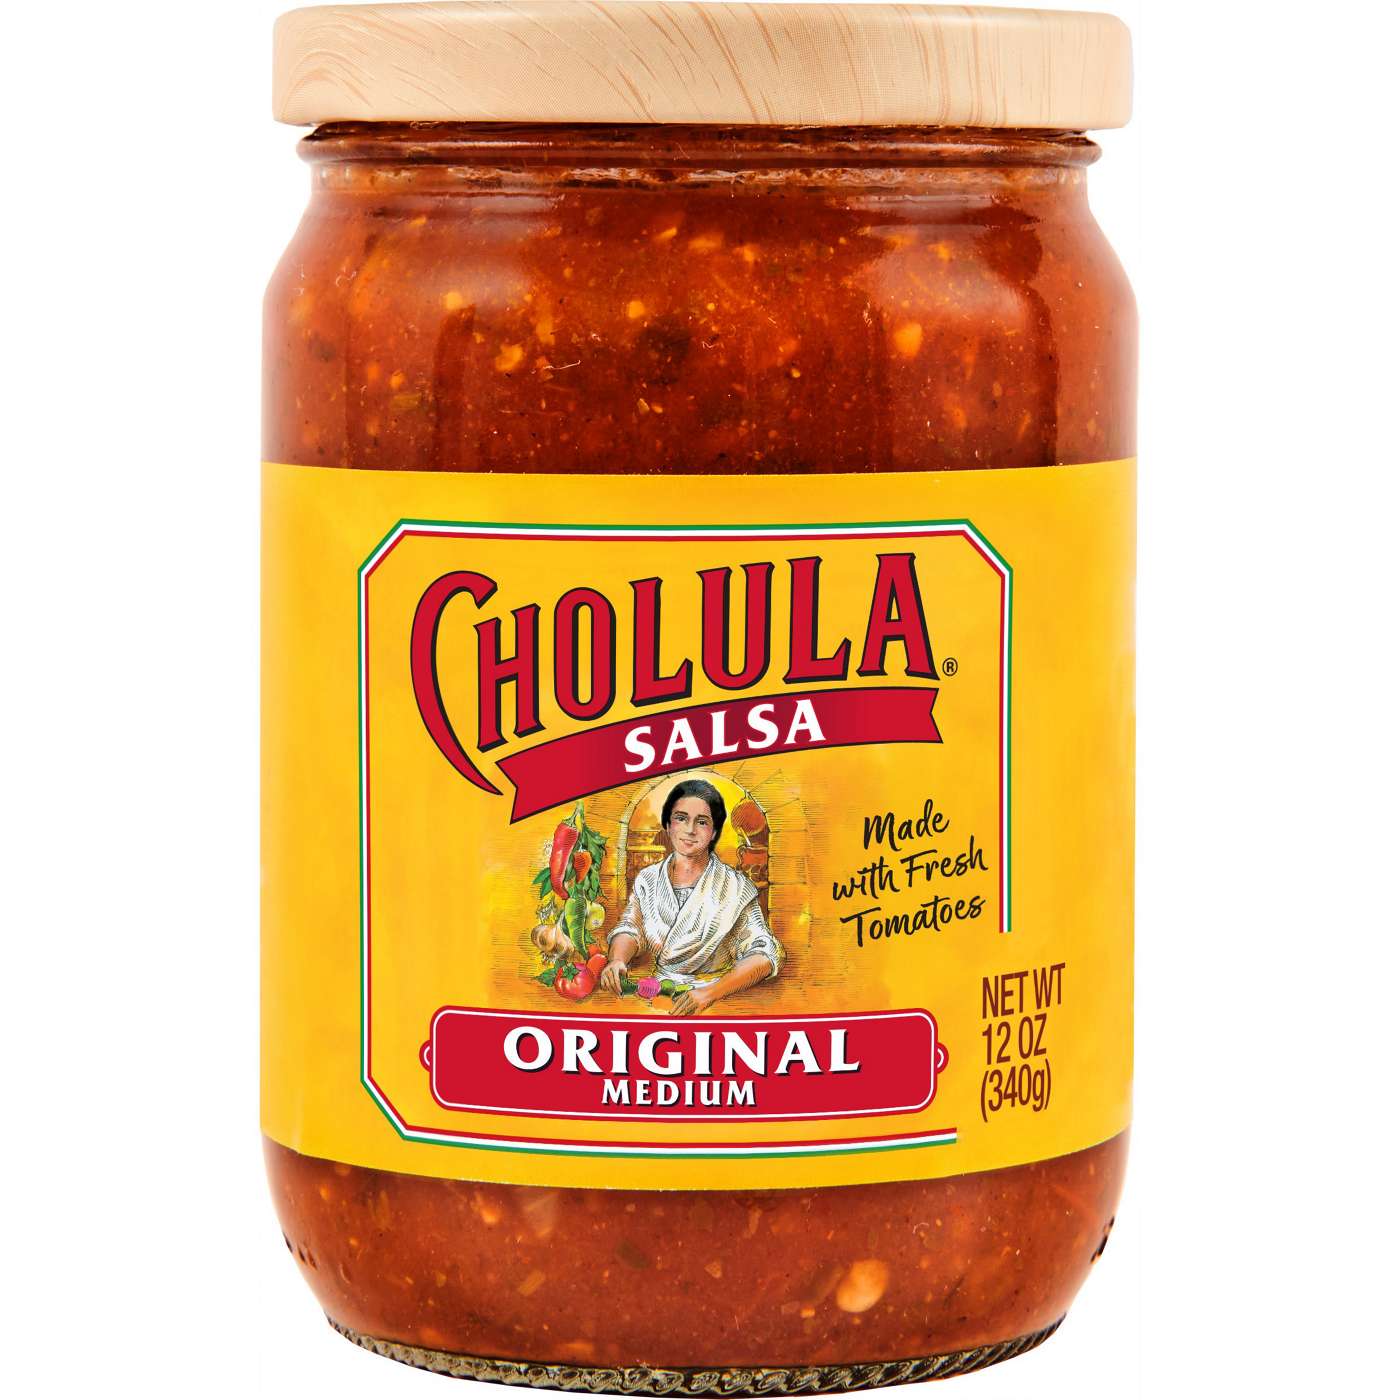 Cholula Original - Medium Salsa; image 1 of 4